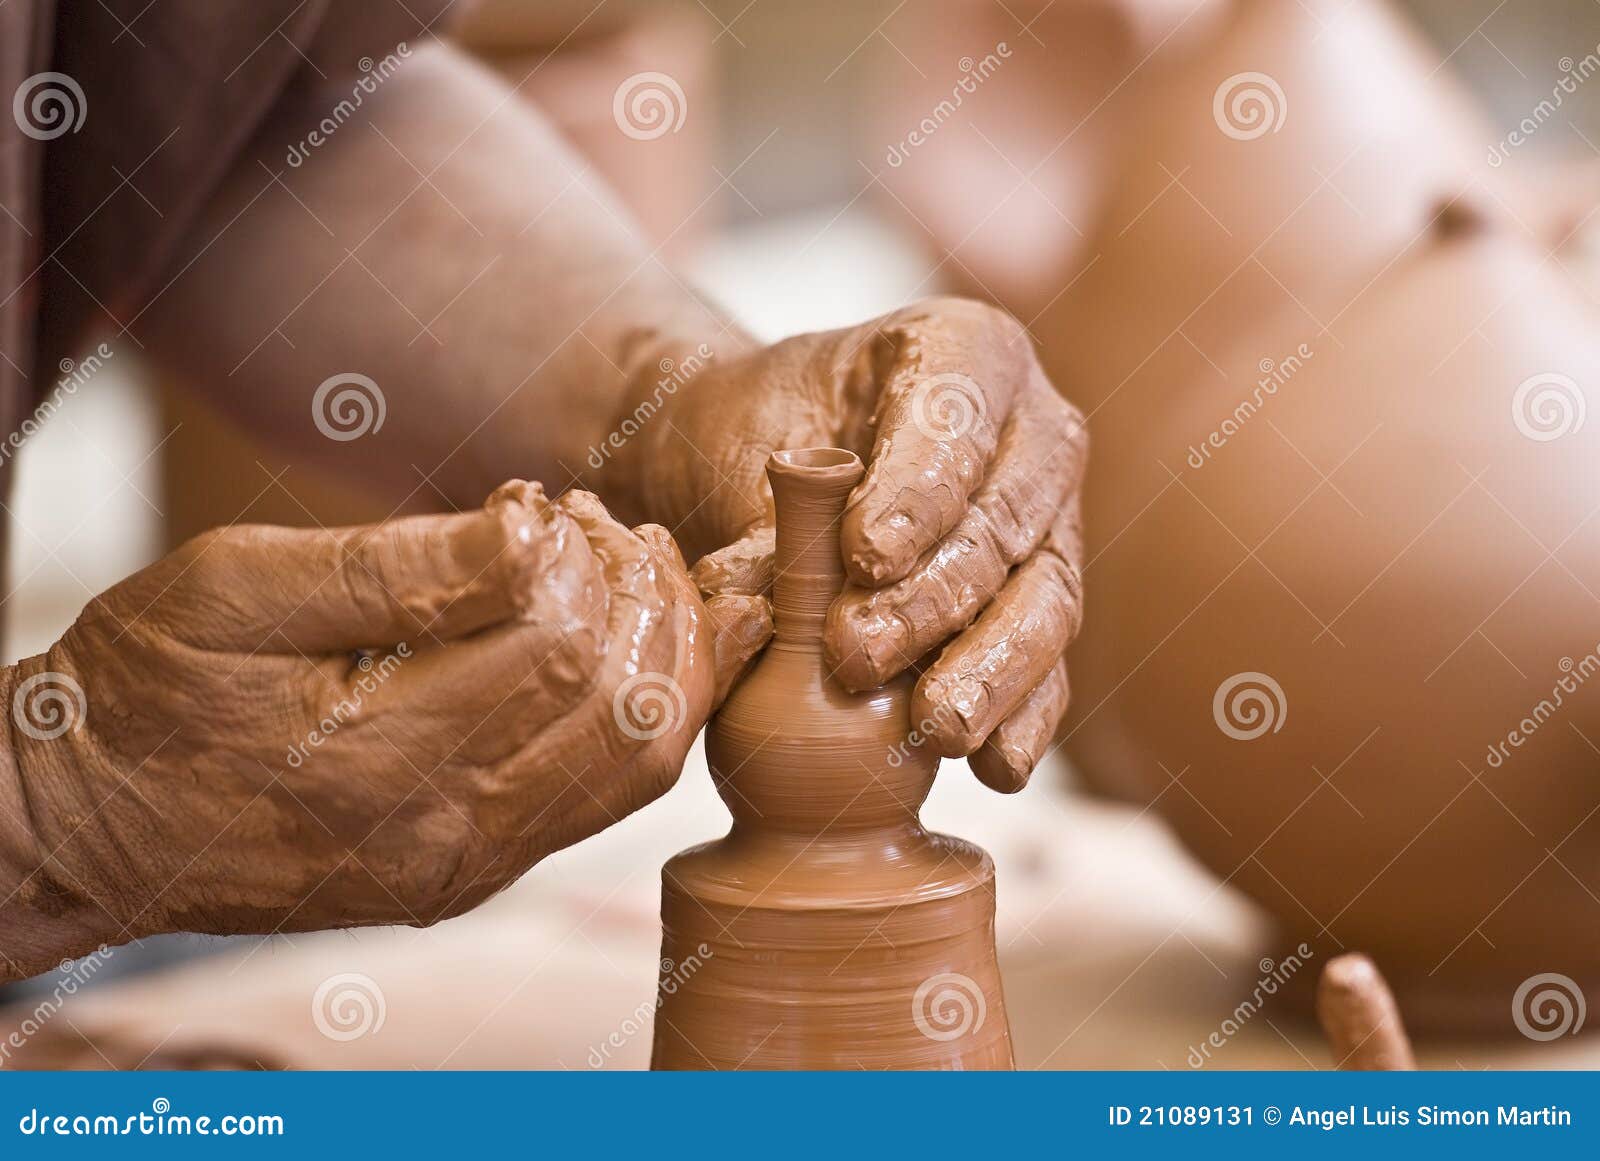 Hands working. stock image. Image of creative, artisan - 21089131